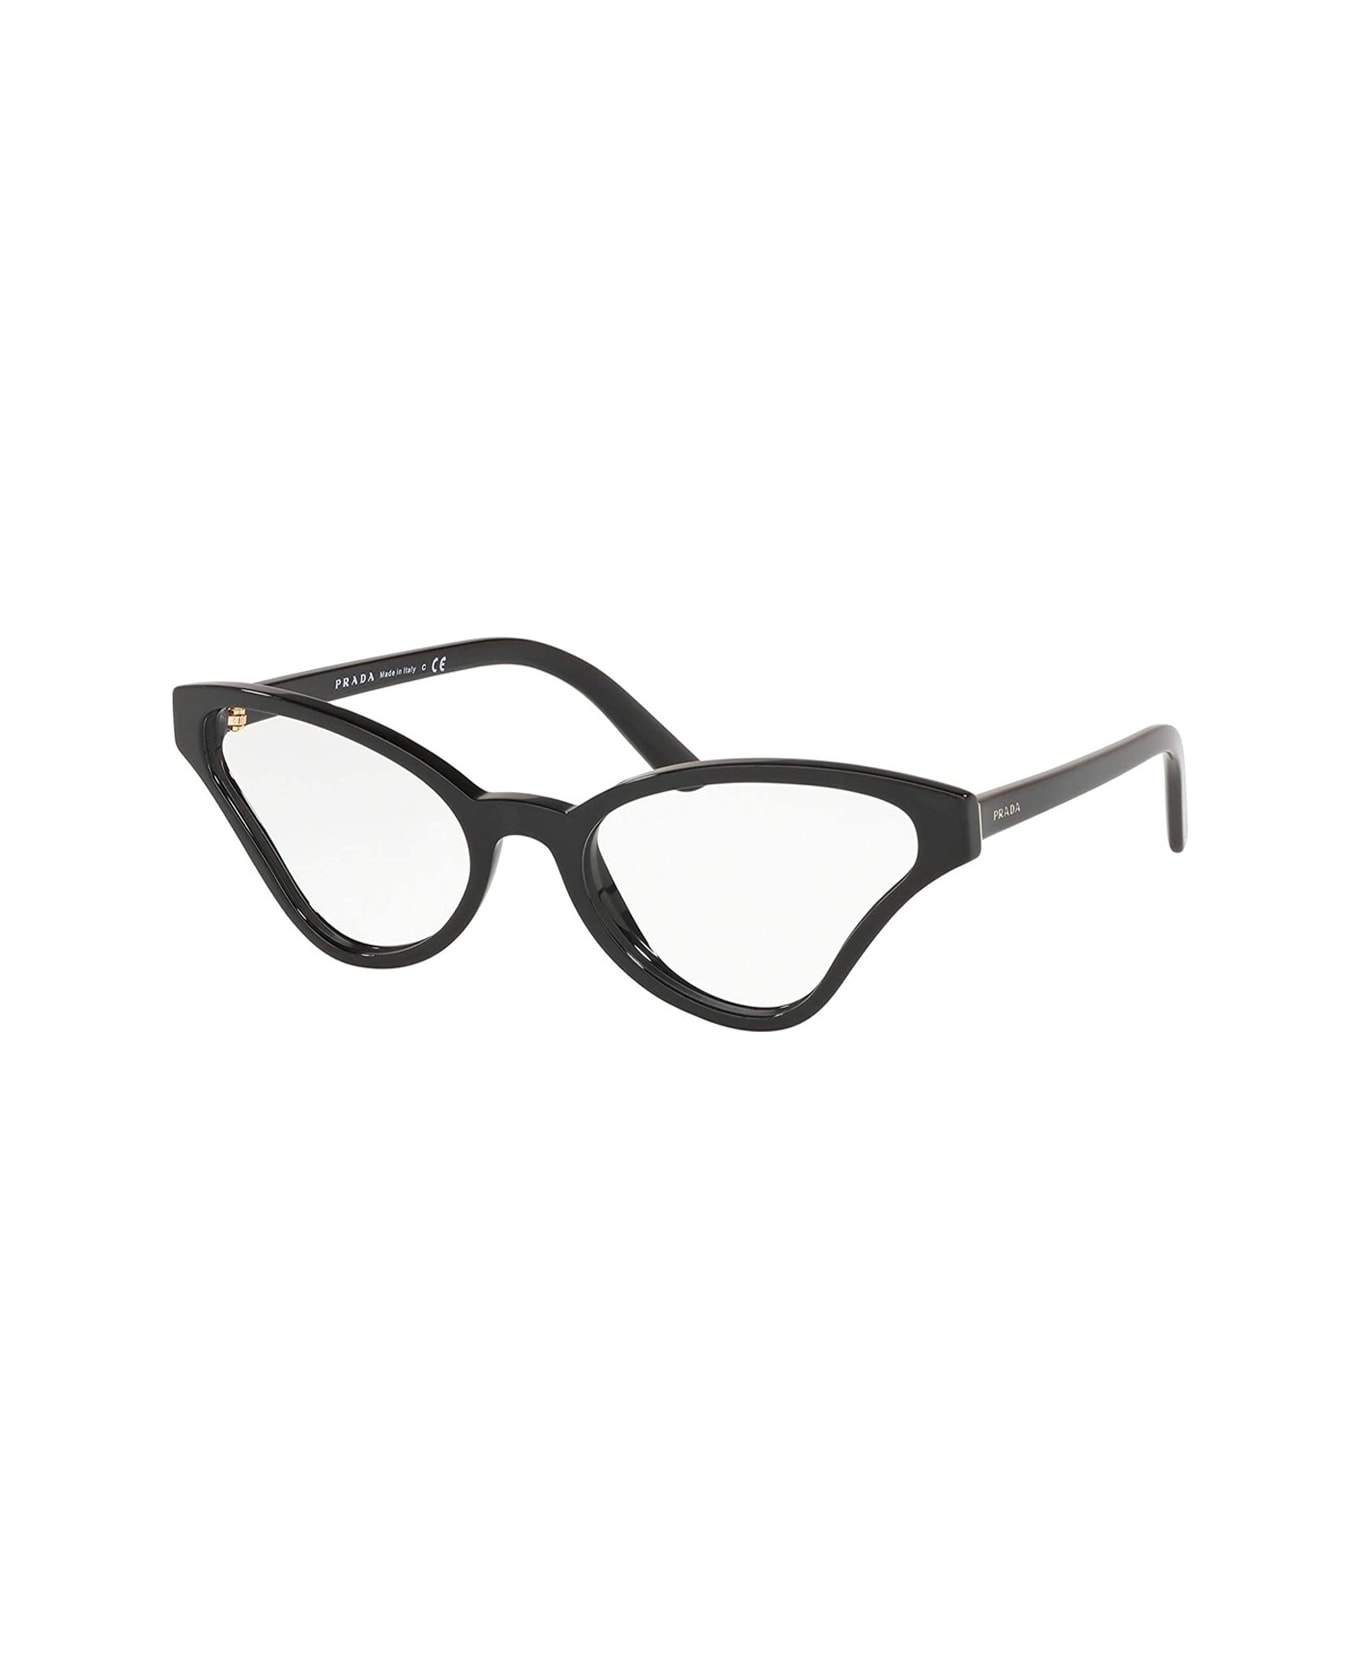 Prada Eyewear Pr 06xv Glasses - Nero